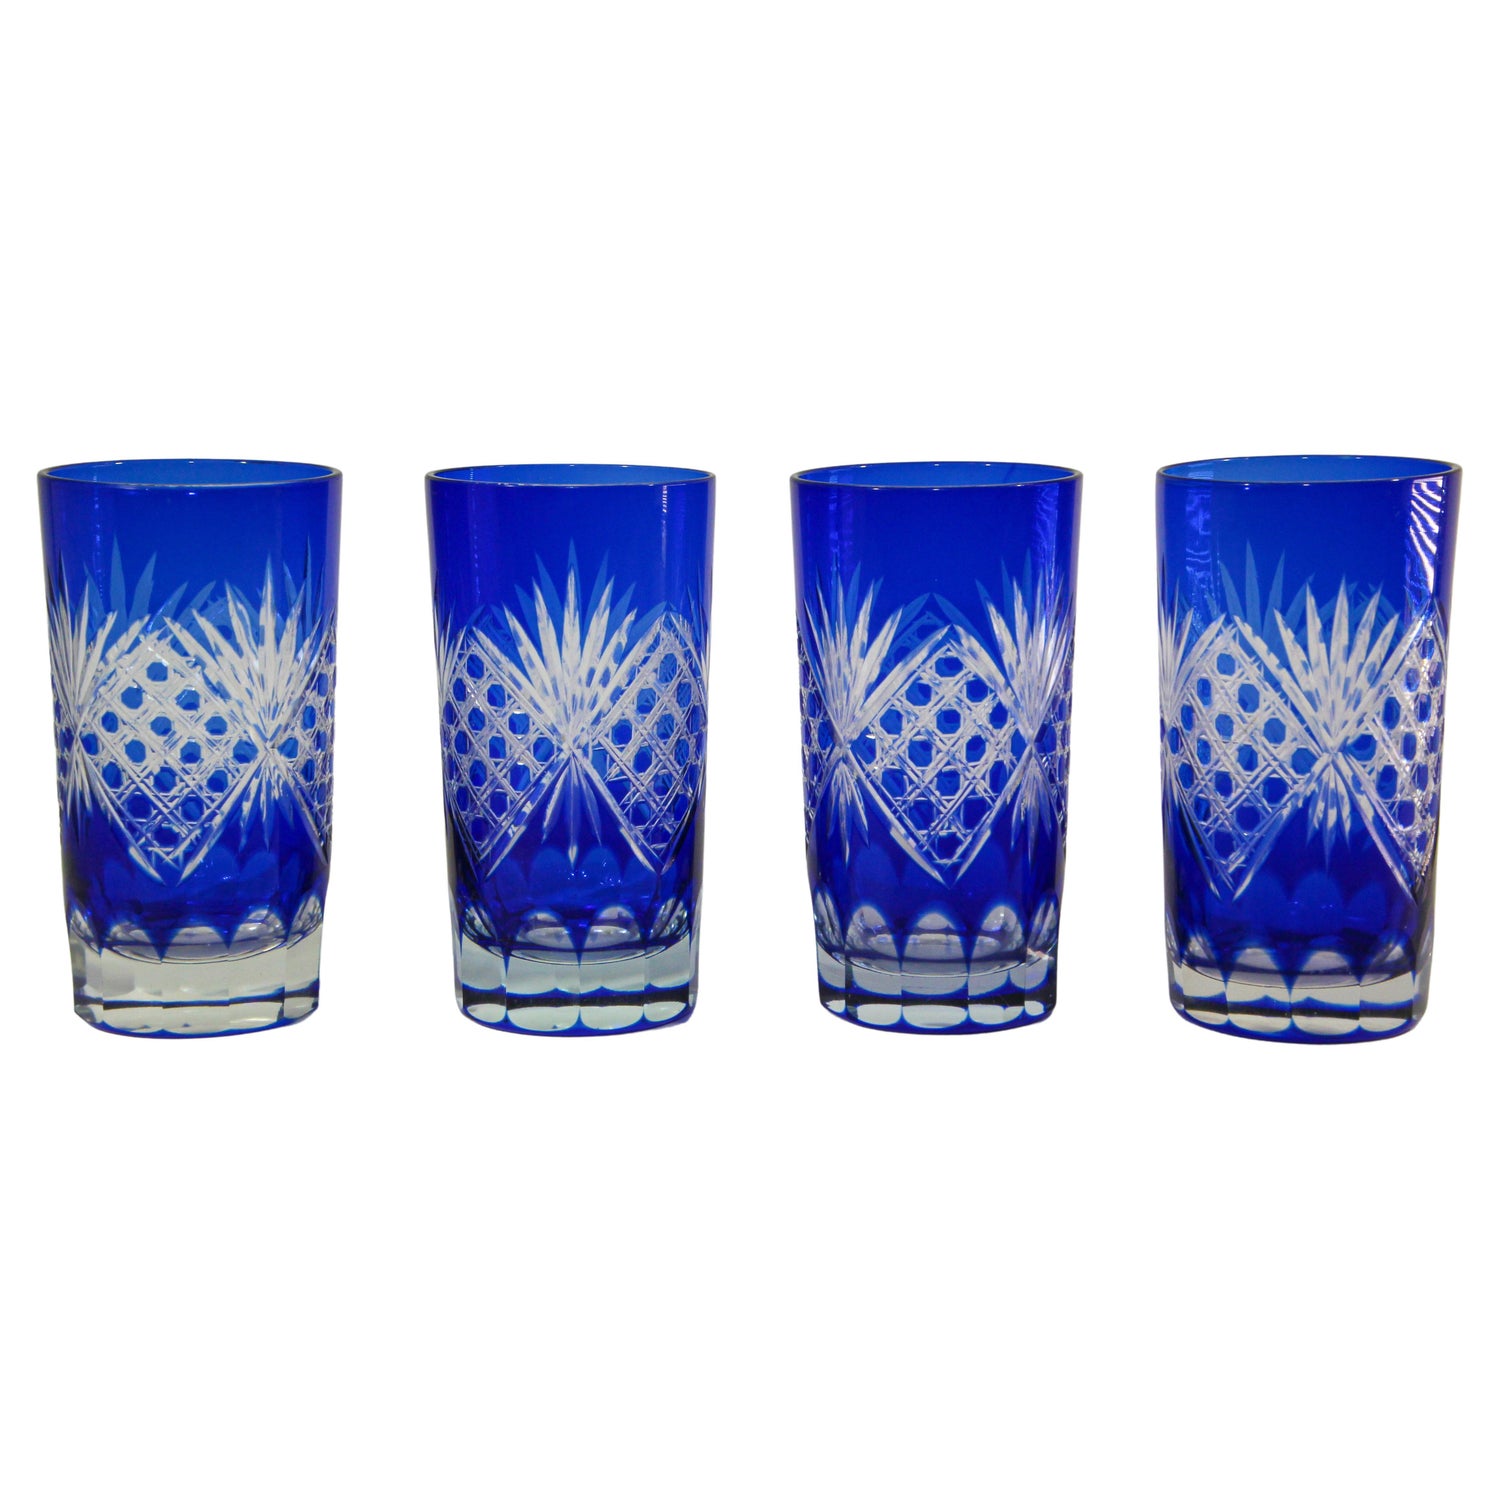 https://a.1stdibscdn.com/set-of-four-cobalt-blue-cut-crystal-drinking-rock-glasses-tumbler-for-sale/f_9068/f_279848221648476927640/f_27984822_1648476930106_bg_processed.jpg?width=1500